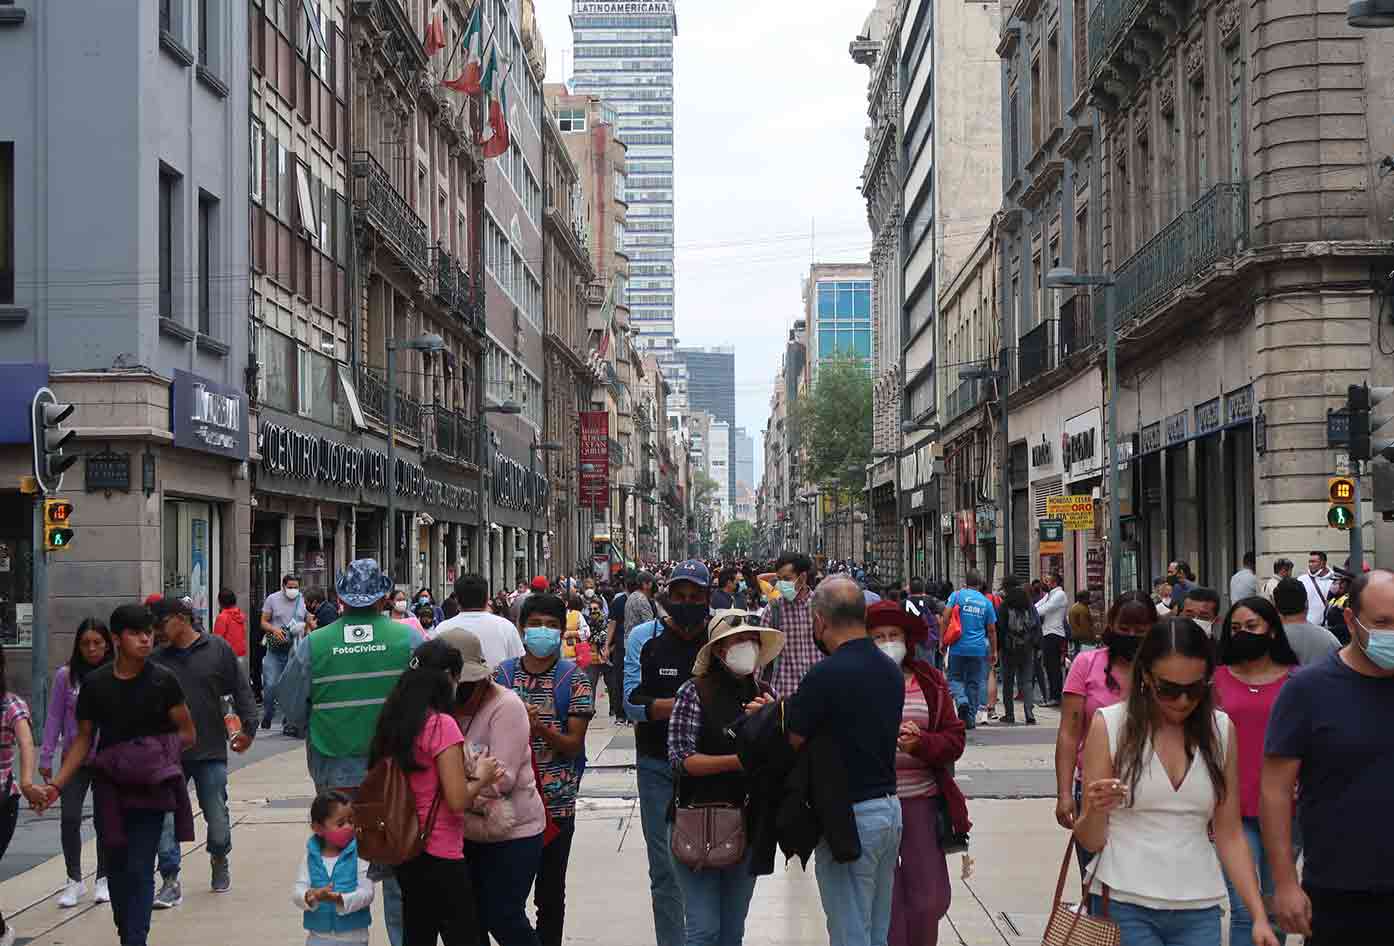 mexico city centro historico